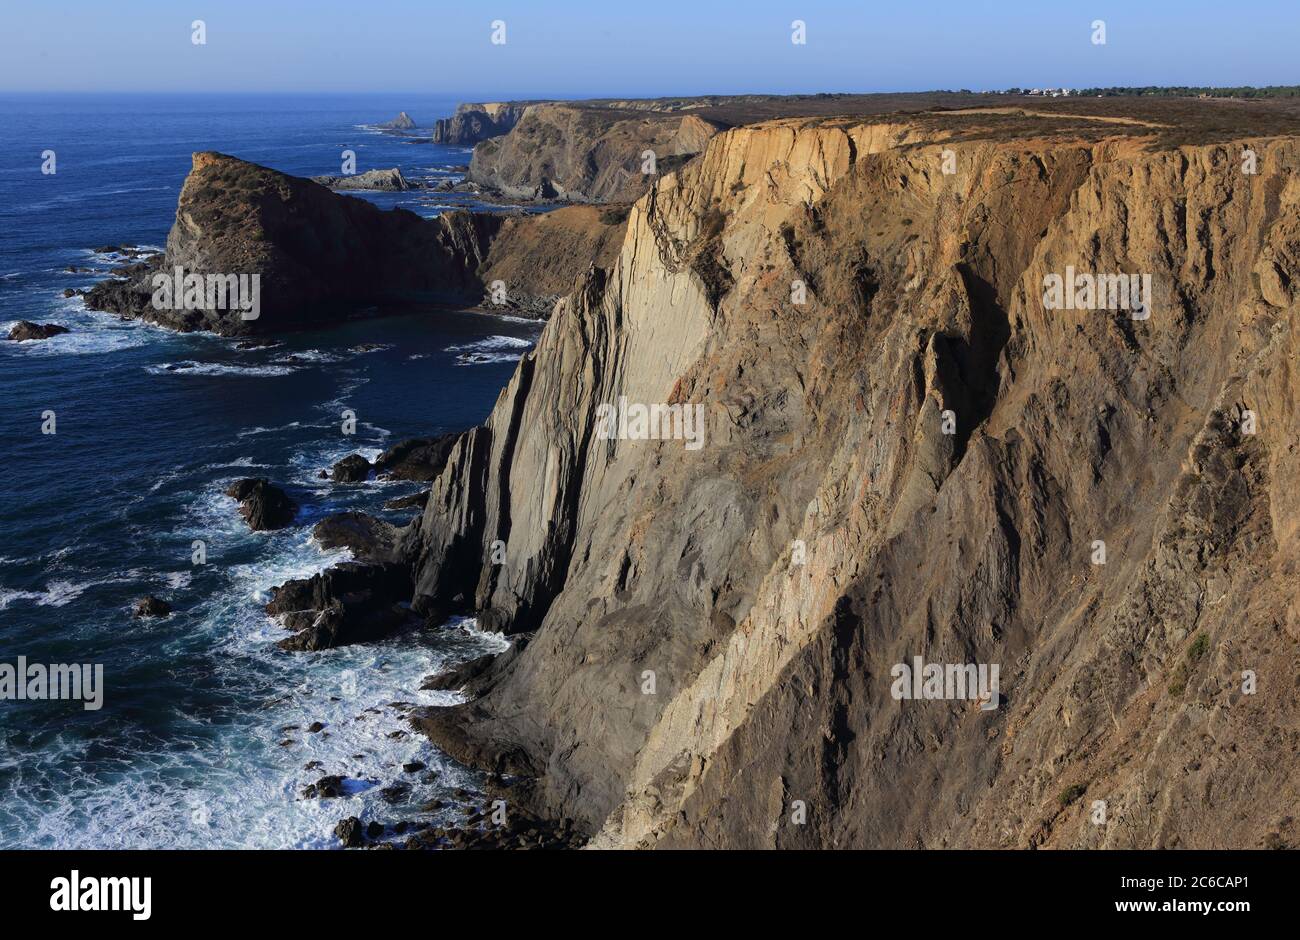 Portugal, Algarve Region, Aljezur, Arrifana. South-West Alentejo and Vicentine Coast Natural Park cliff top view of the rugged coastline. Stock Photo